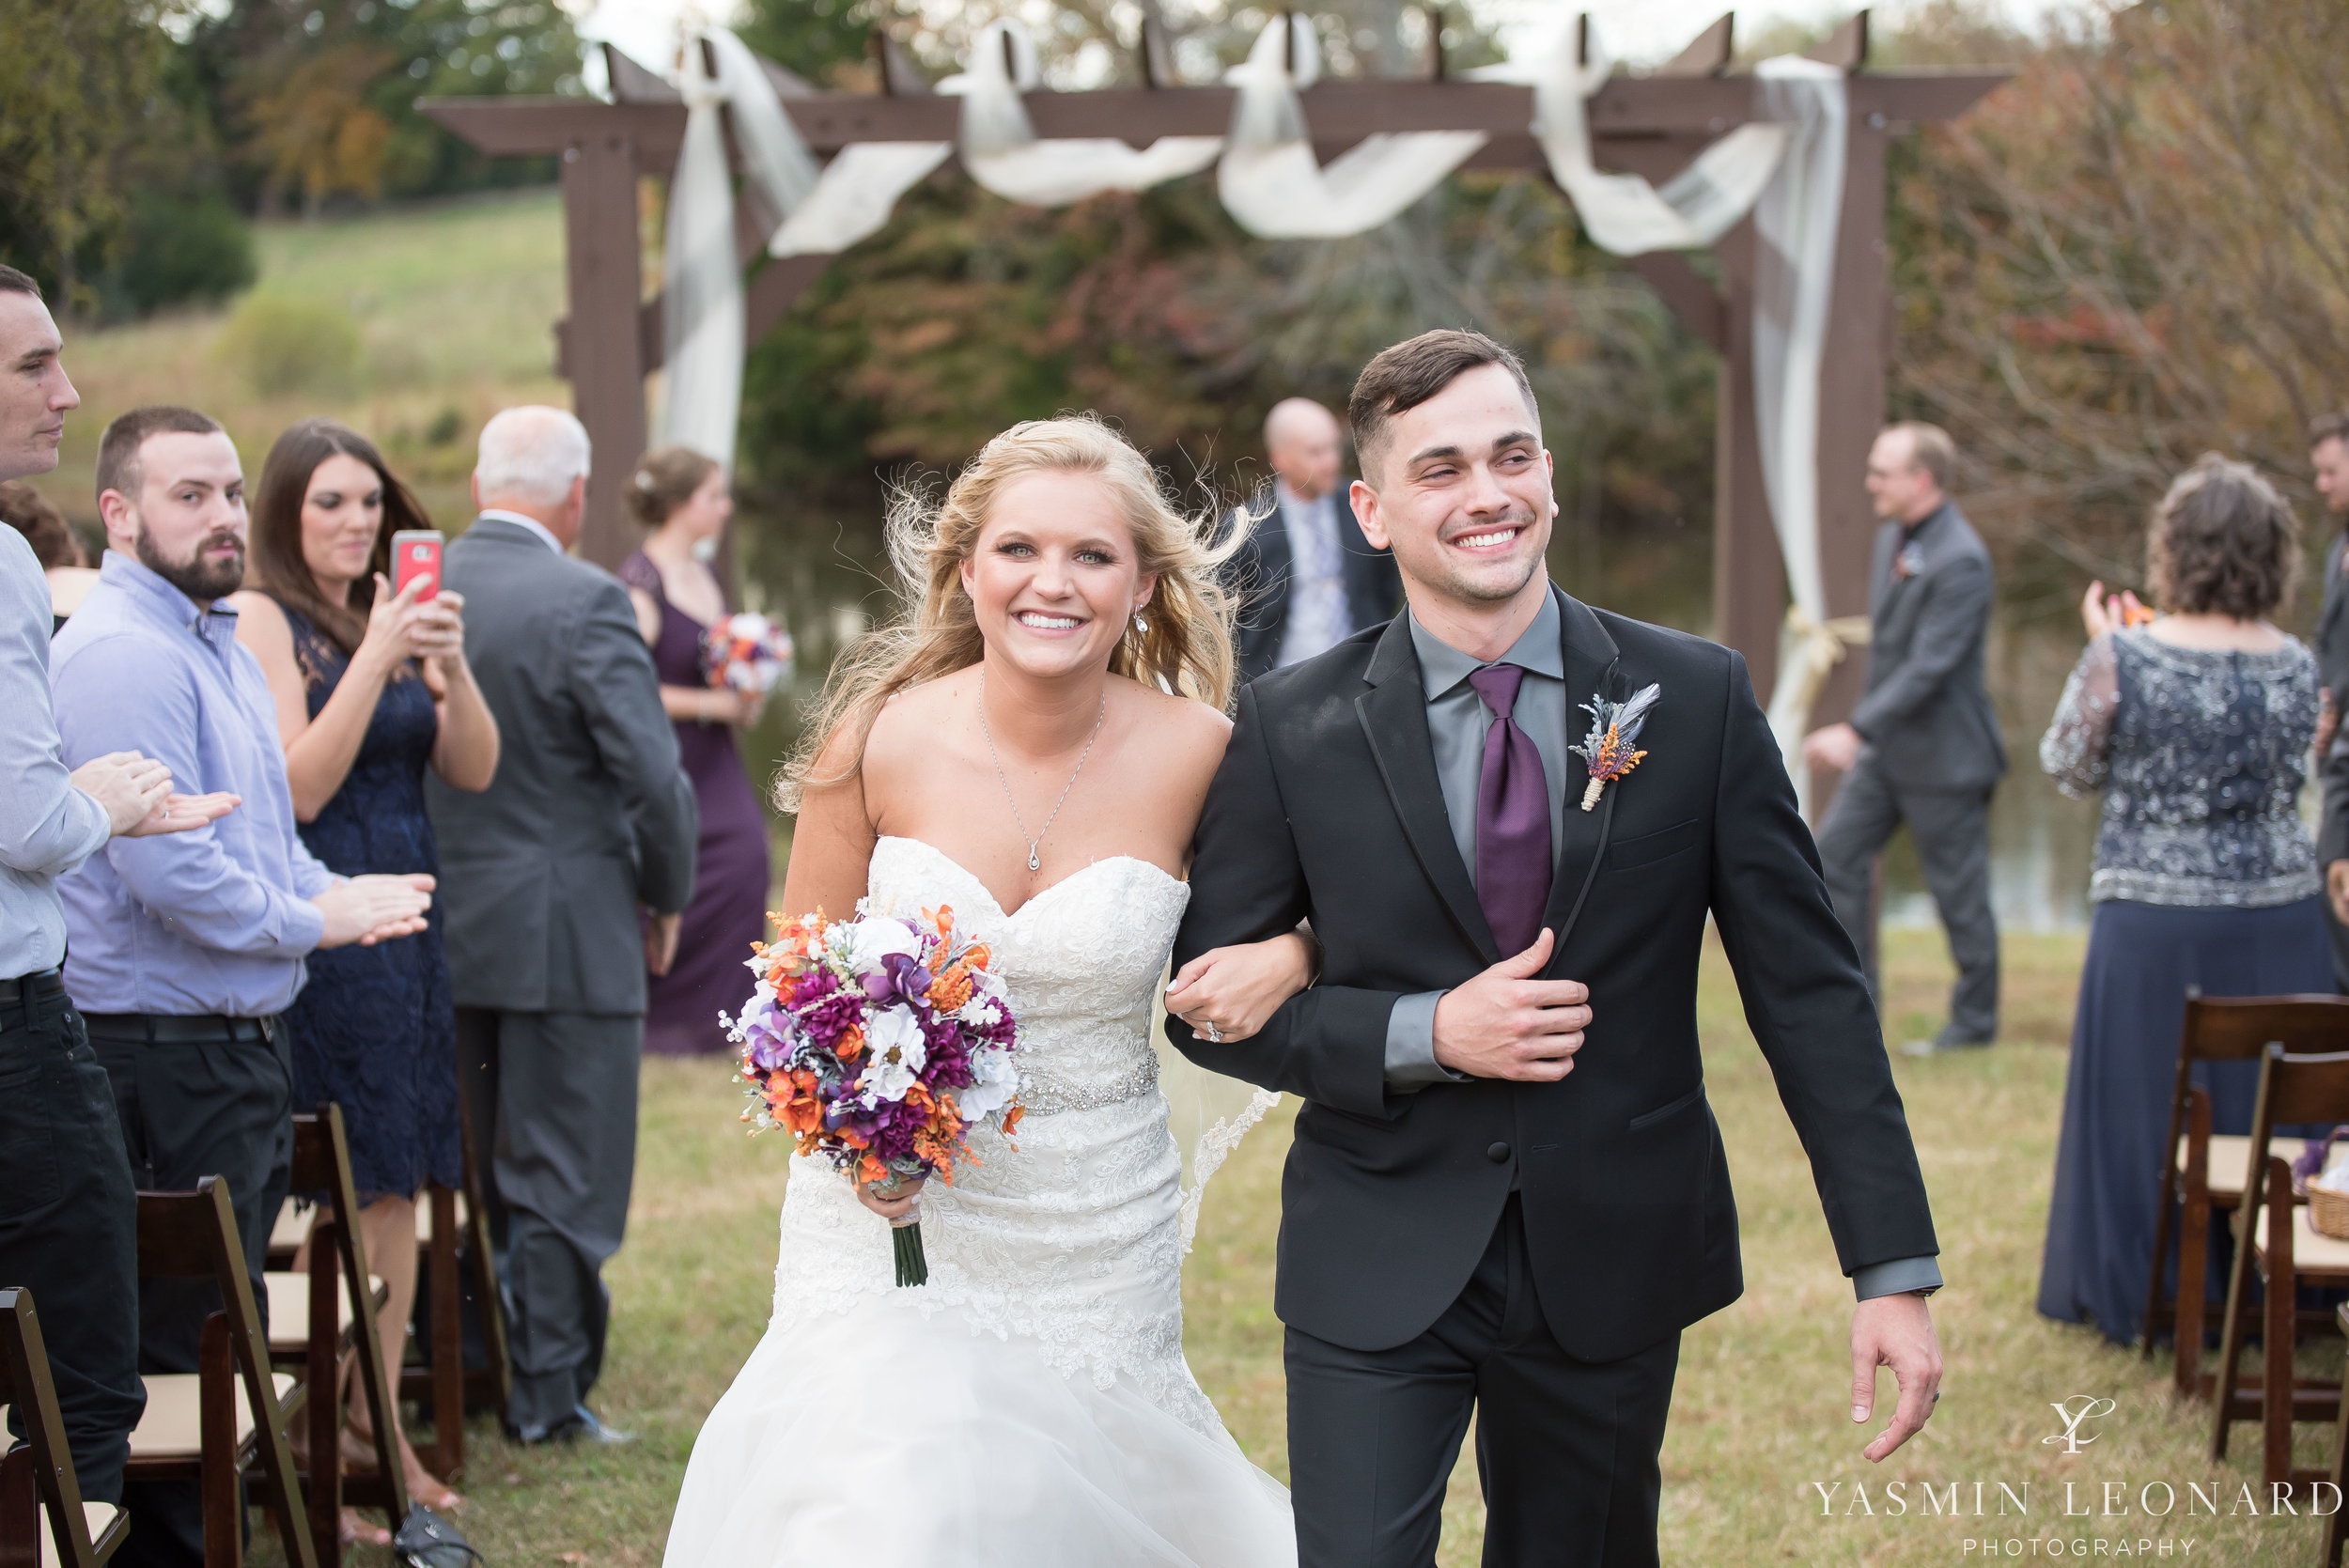 NC Wedding Photographer - Yasmin Leonard Photography - Summerfield Farms - High Point Wedding Photographer - Labri at Linwood - Barns in North Carolina - NC Barn Wedding-33.jpg